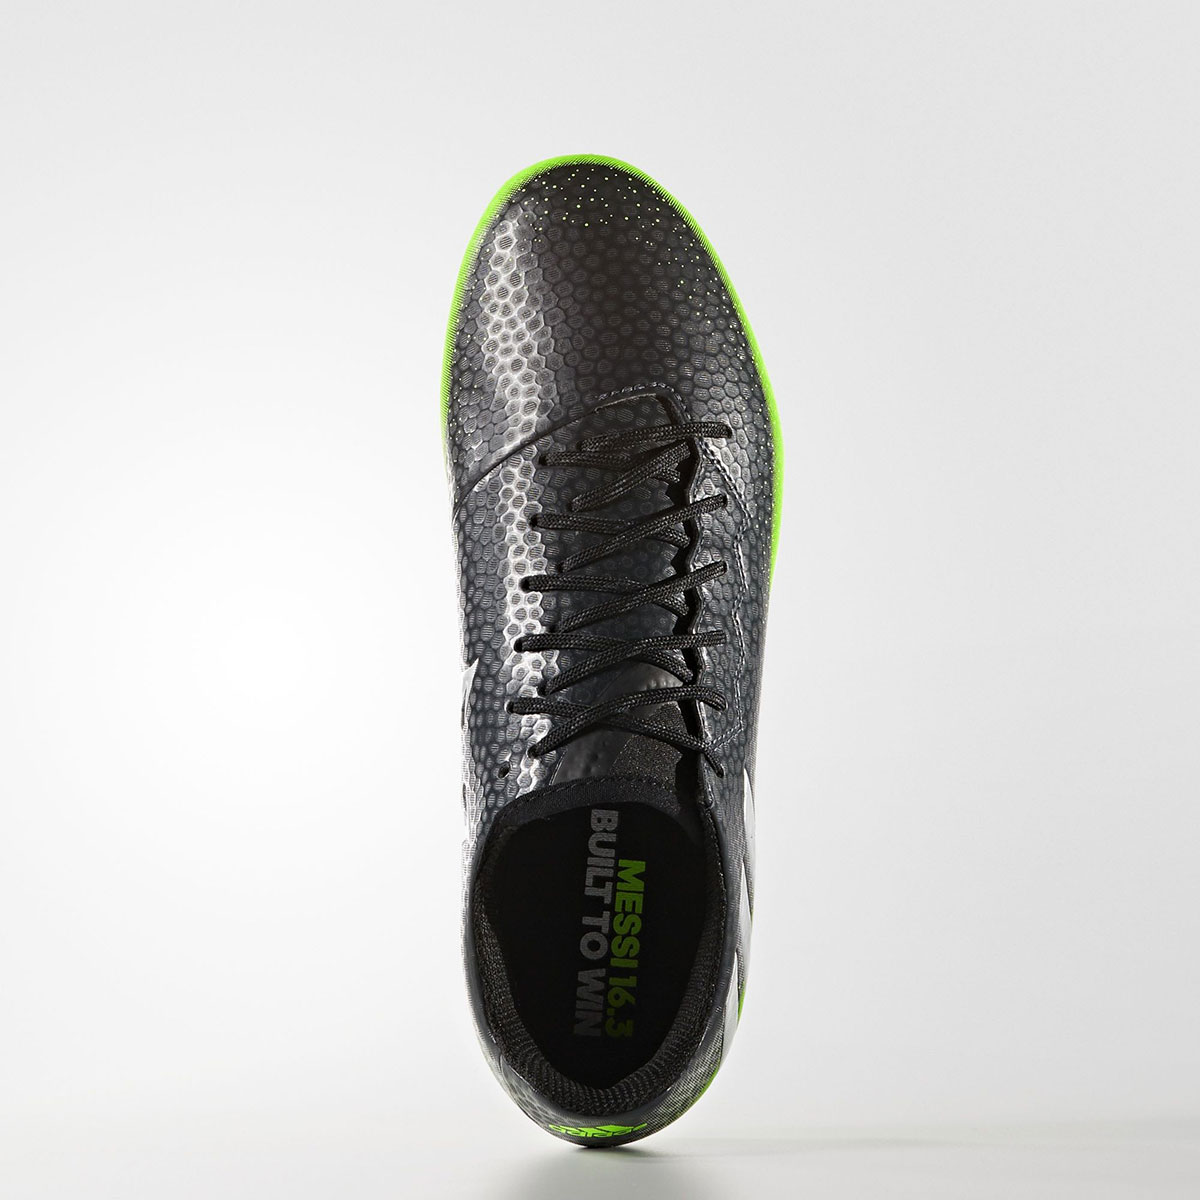 adidas Messi 16.3 FG J black/green  AQ3518